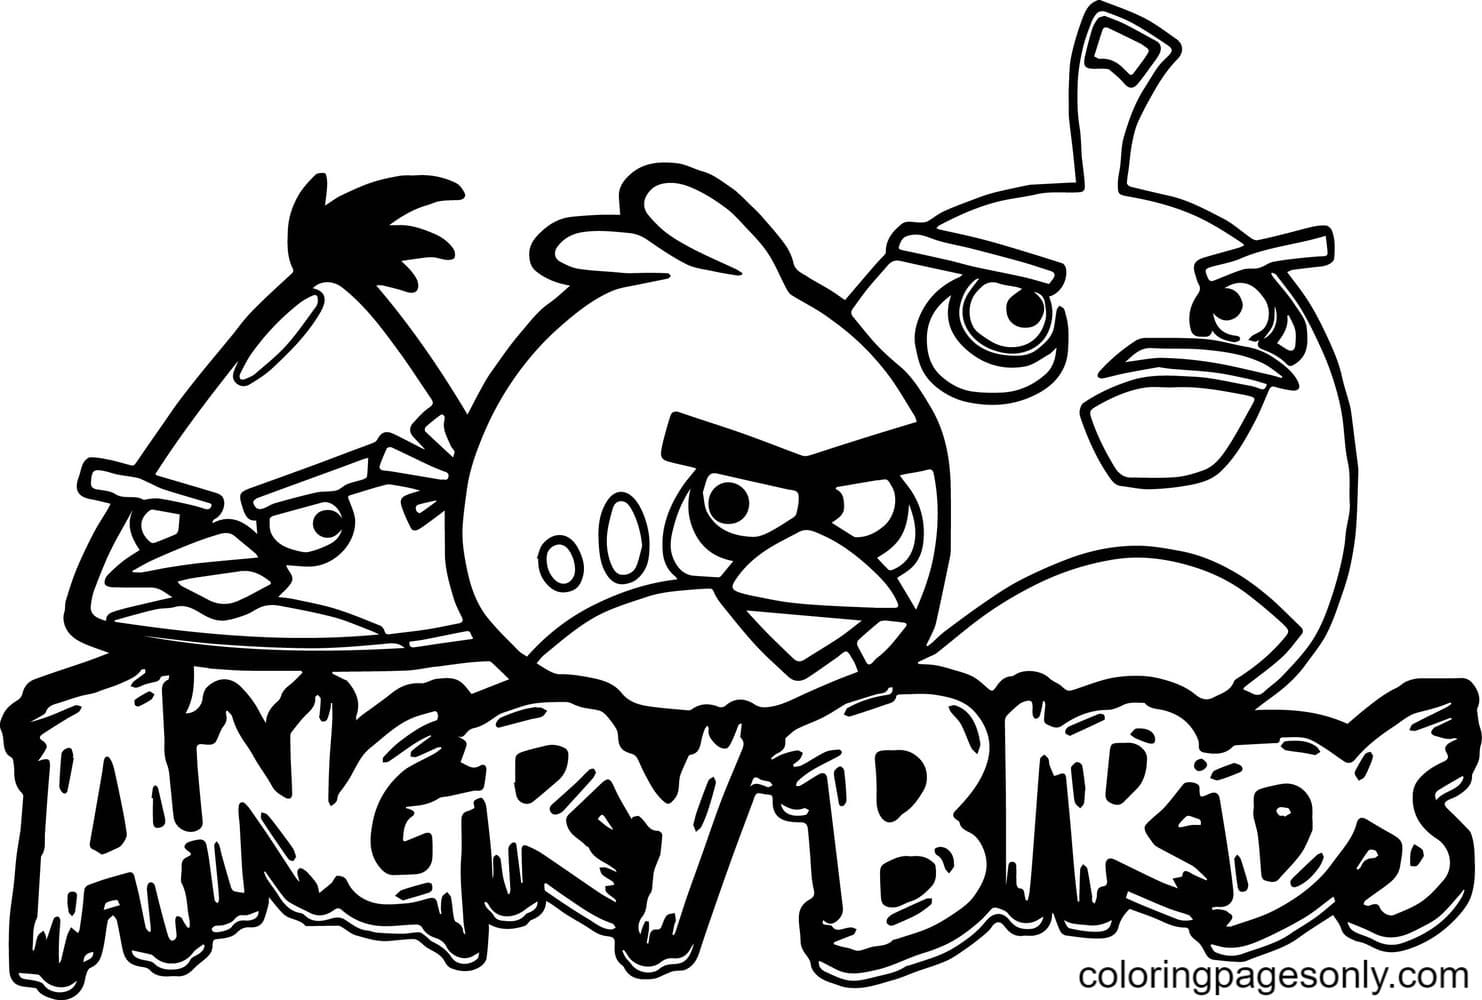 Free Angry Birds Printable Birthday Card